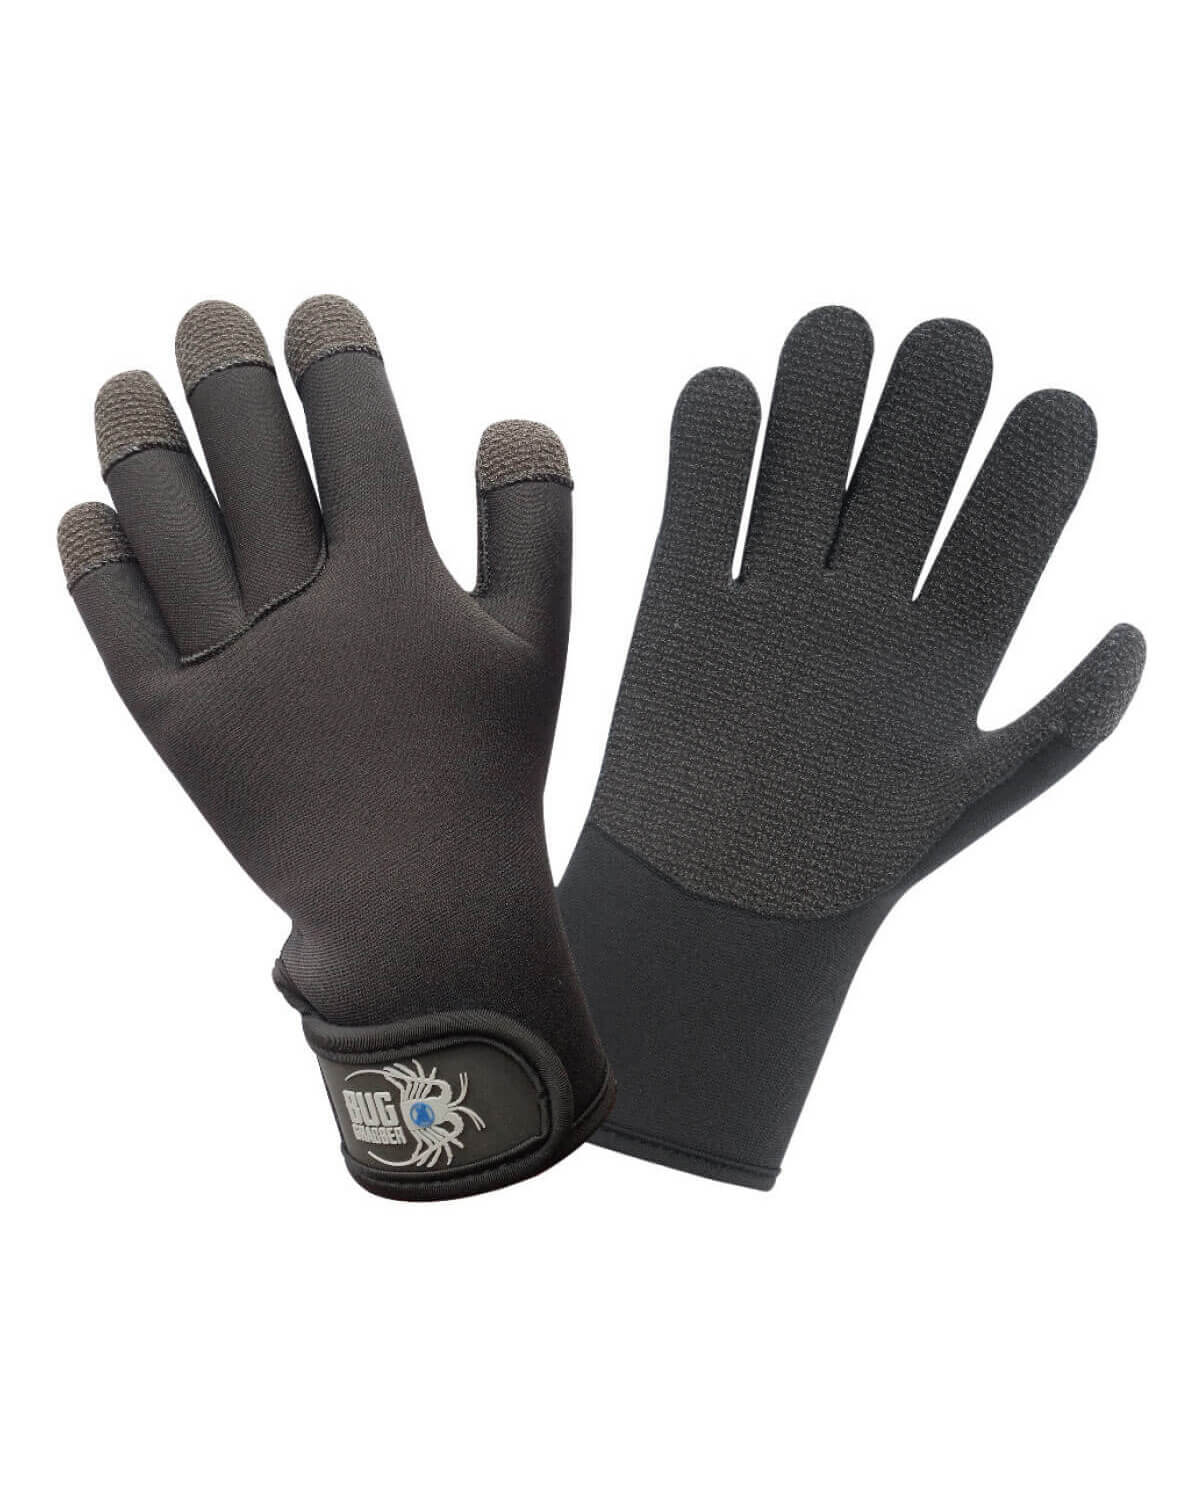 2mm XS SCUBA Bug Grabber Wetsuit Gloves